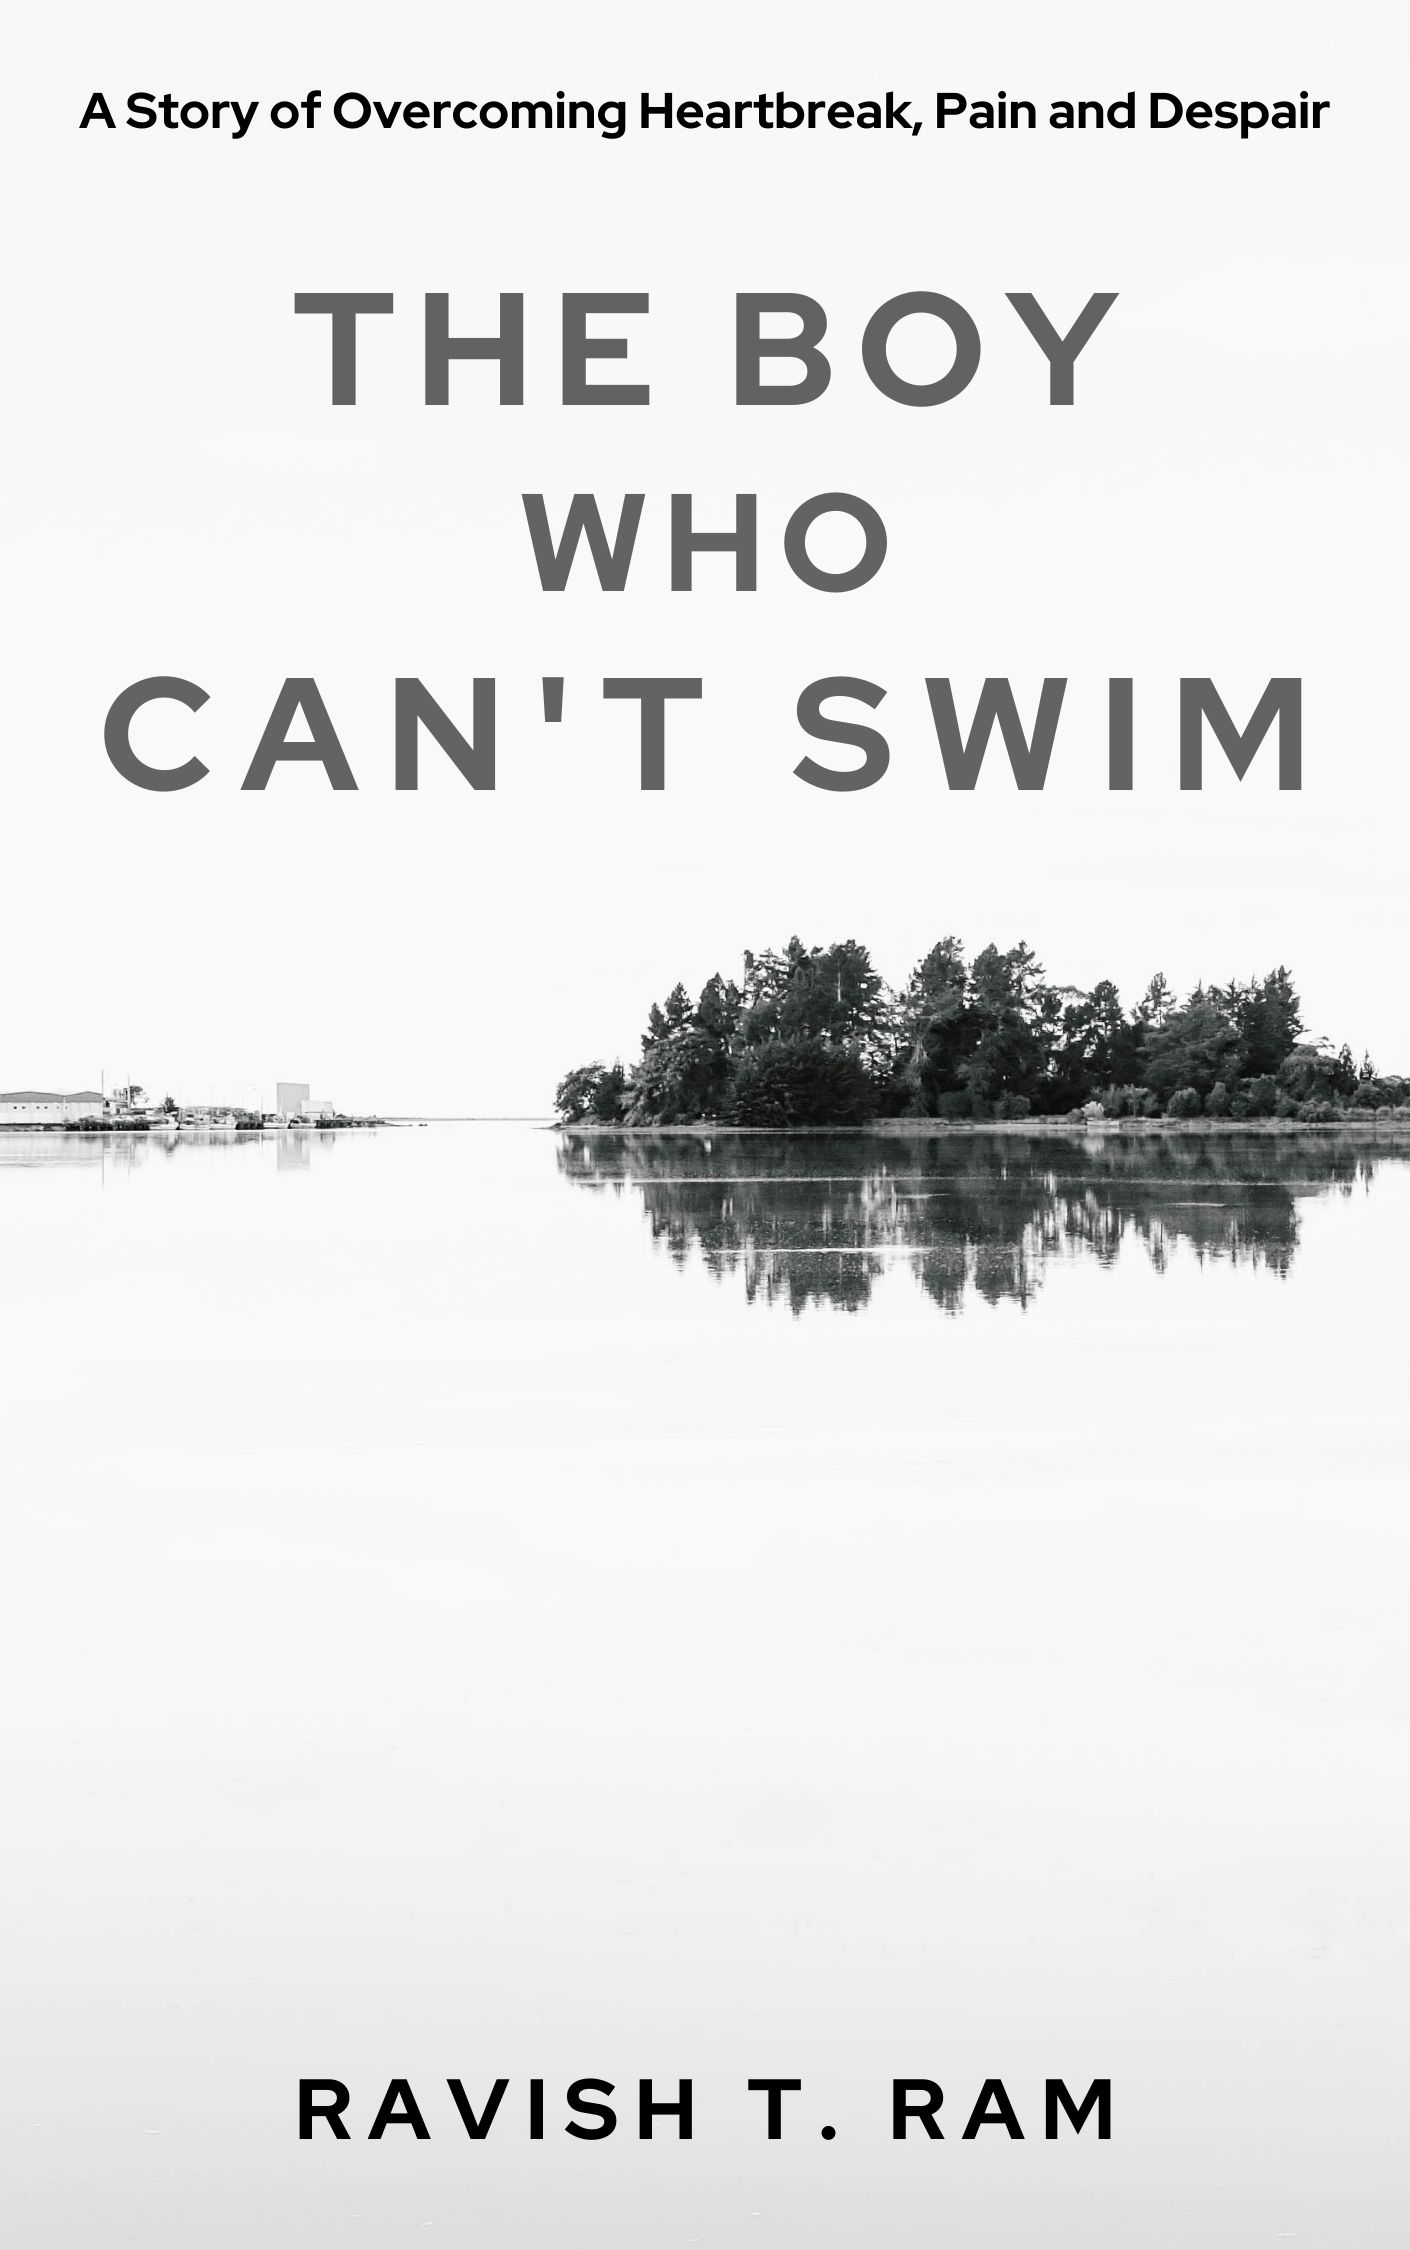 FREE: The Boy who can’t swim by Ravish T. Ram